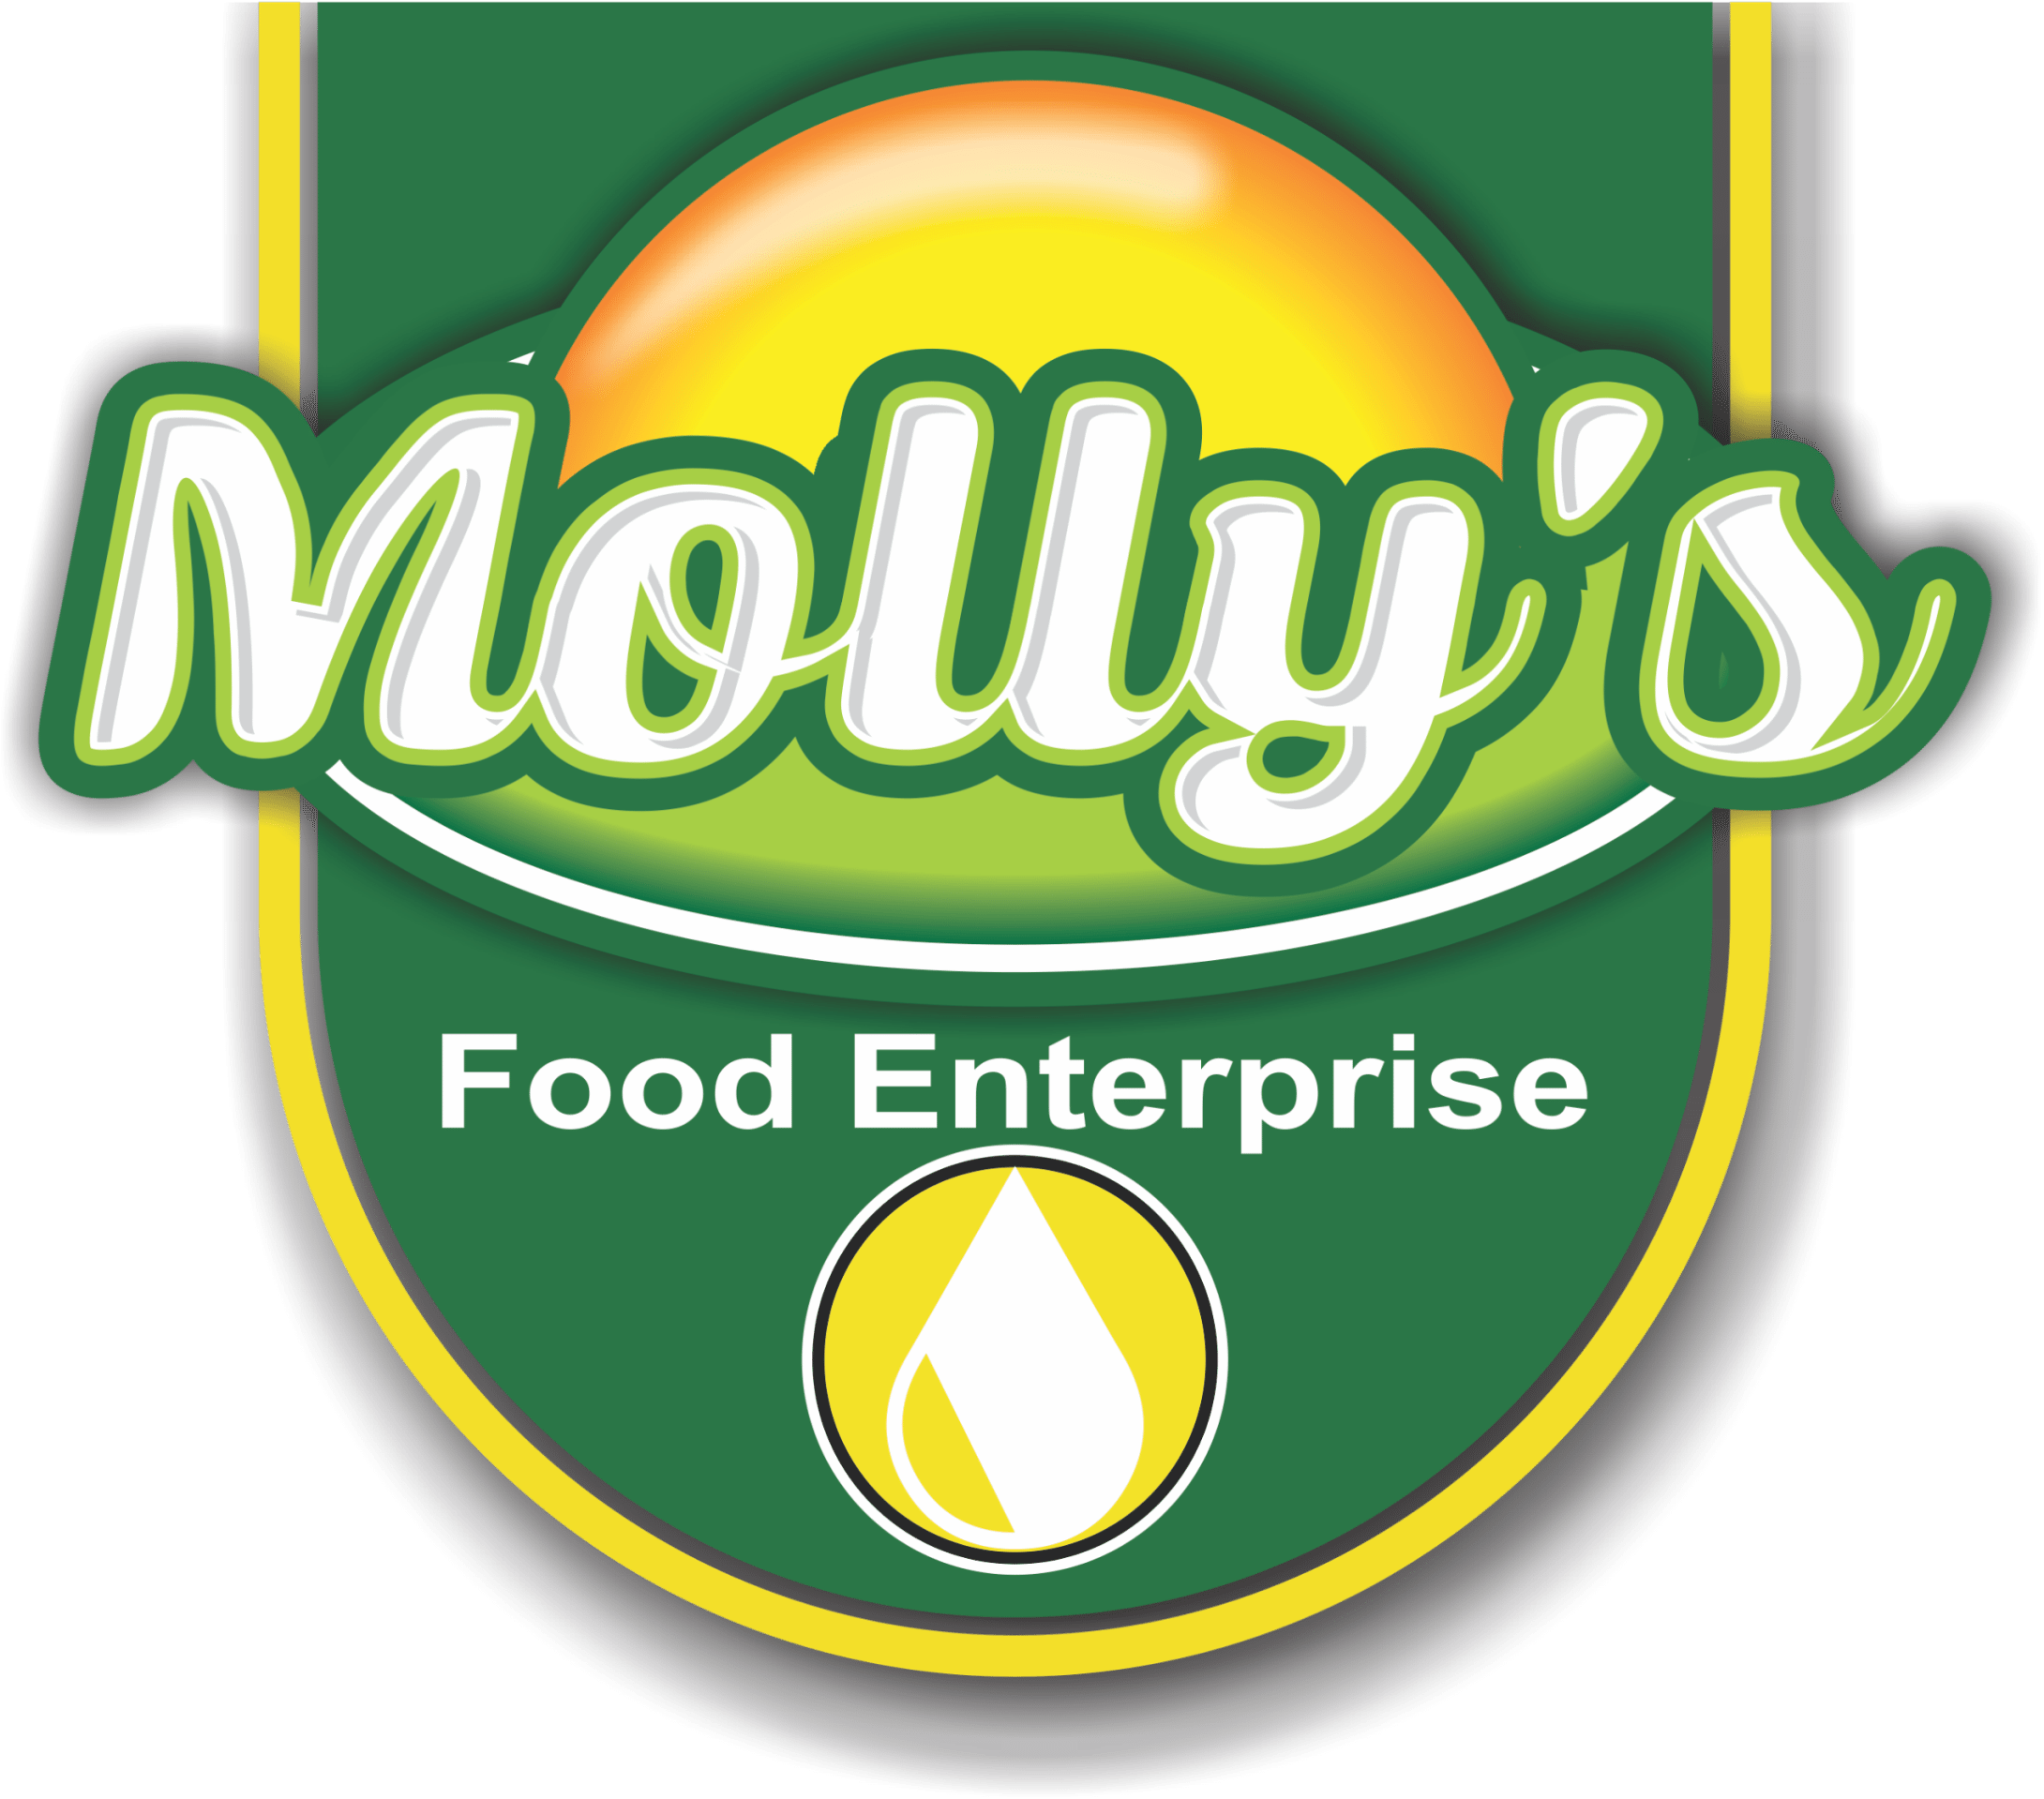 Mollys Food Enterprise